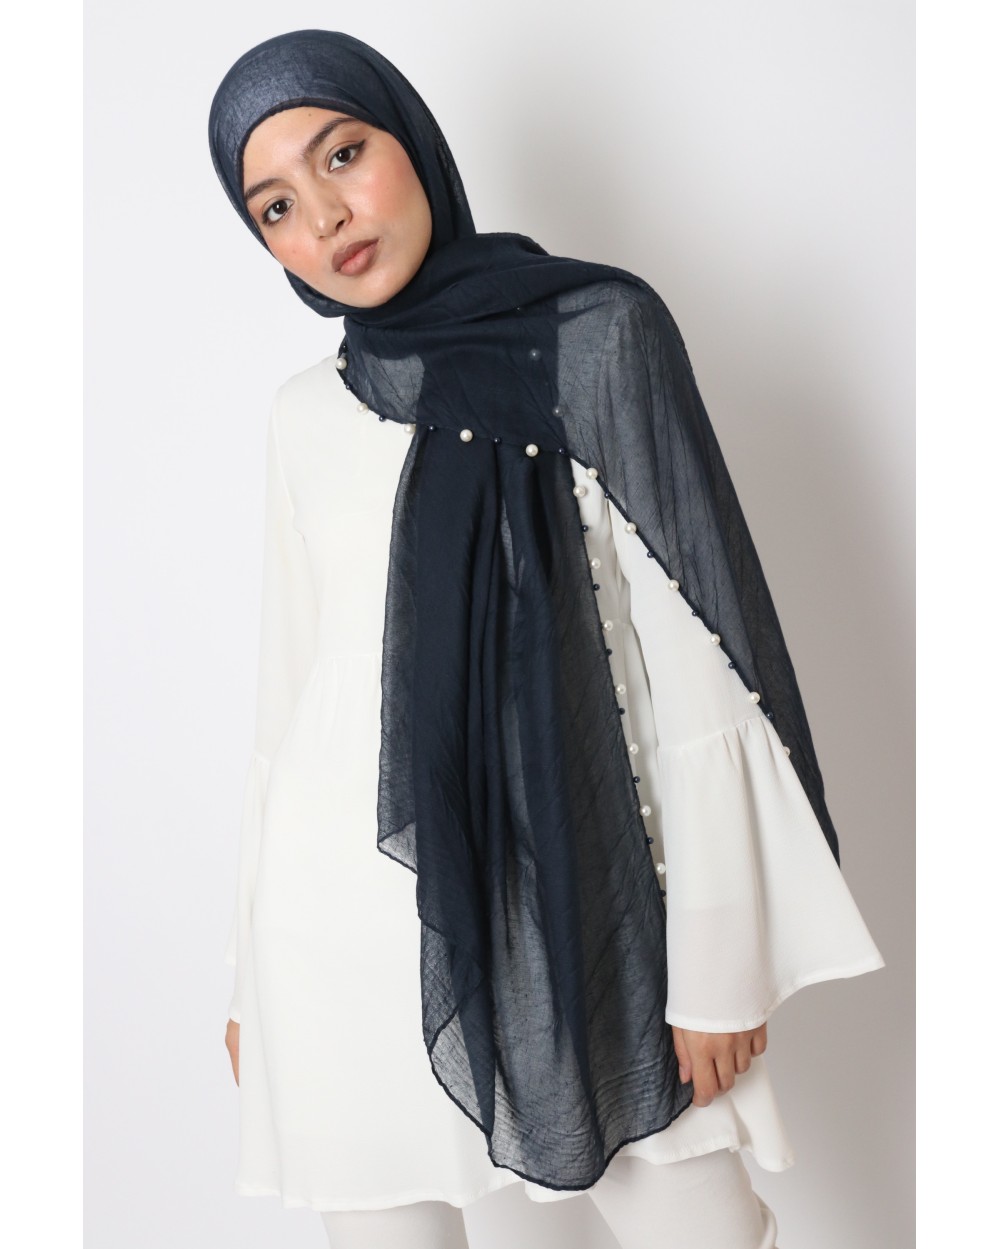 Hijab Anastasia avec perle